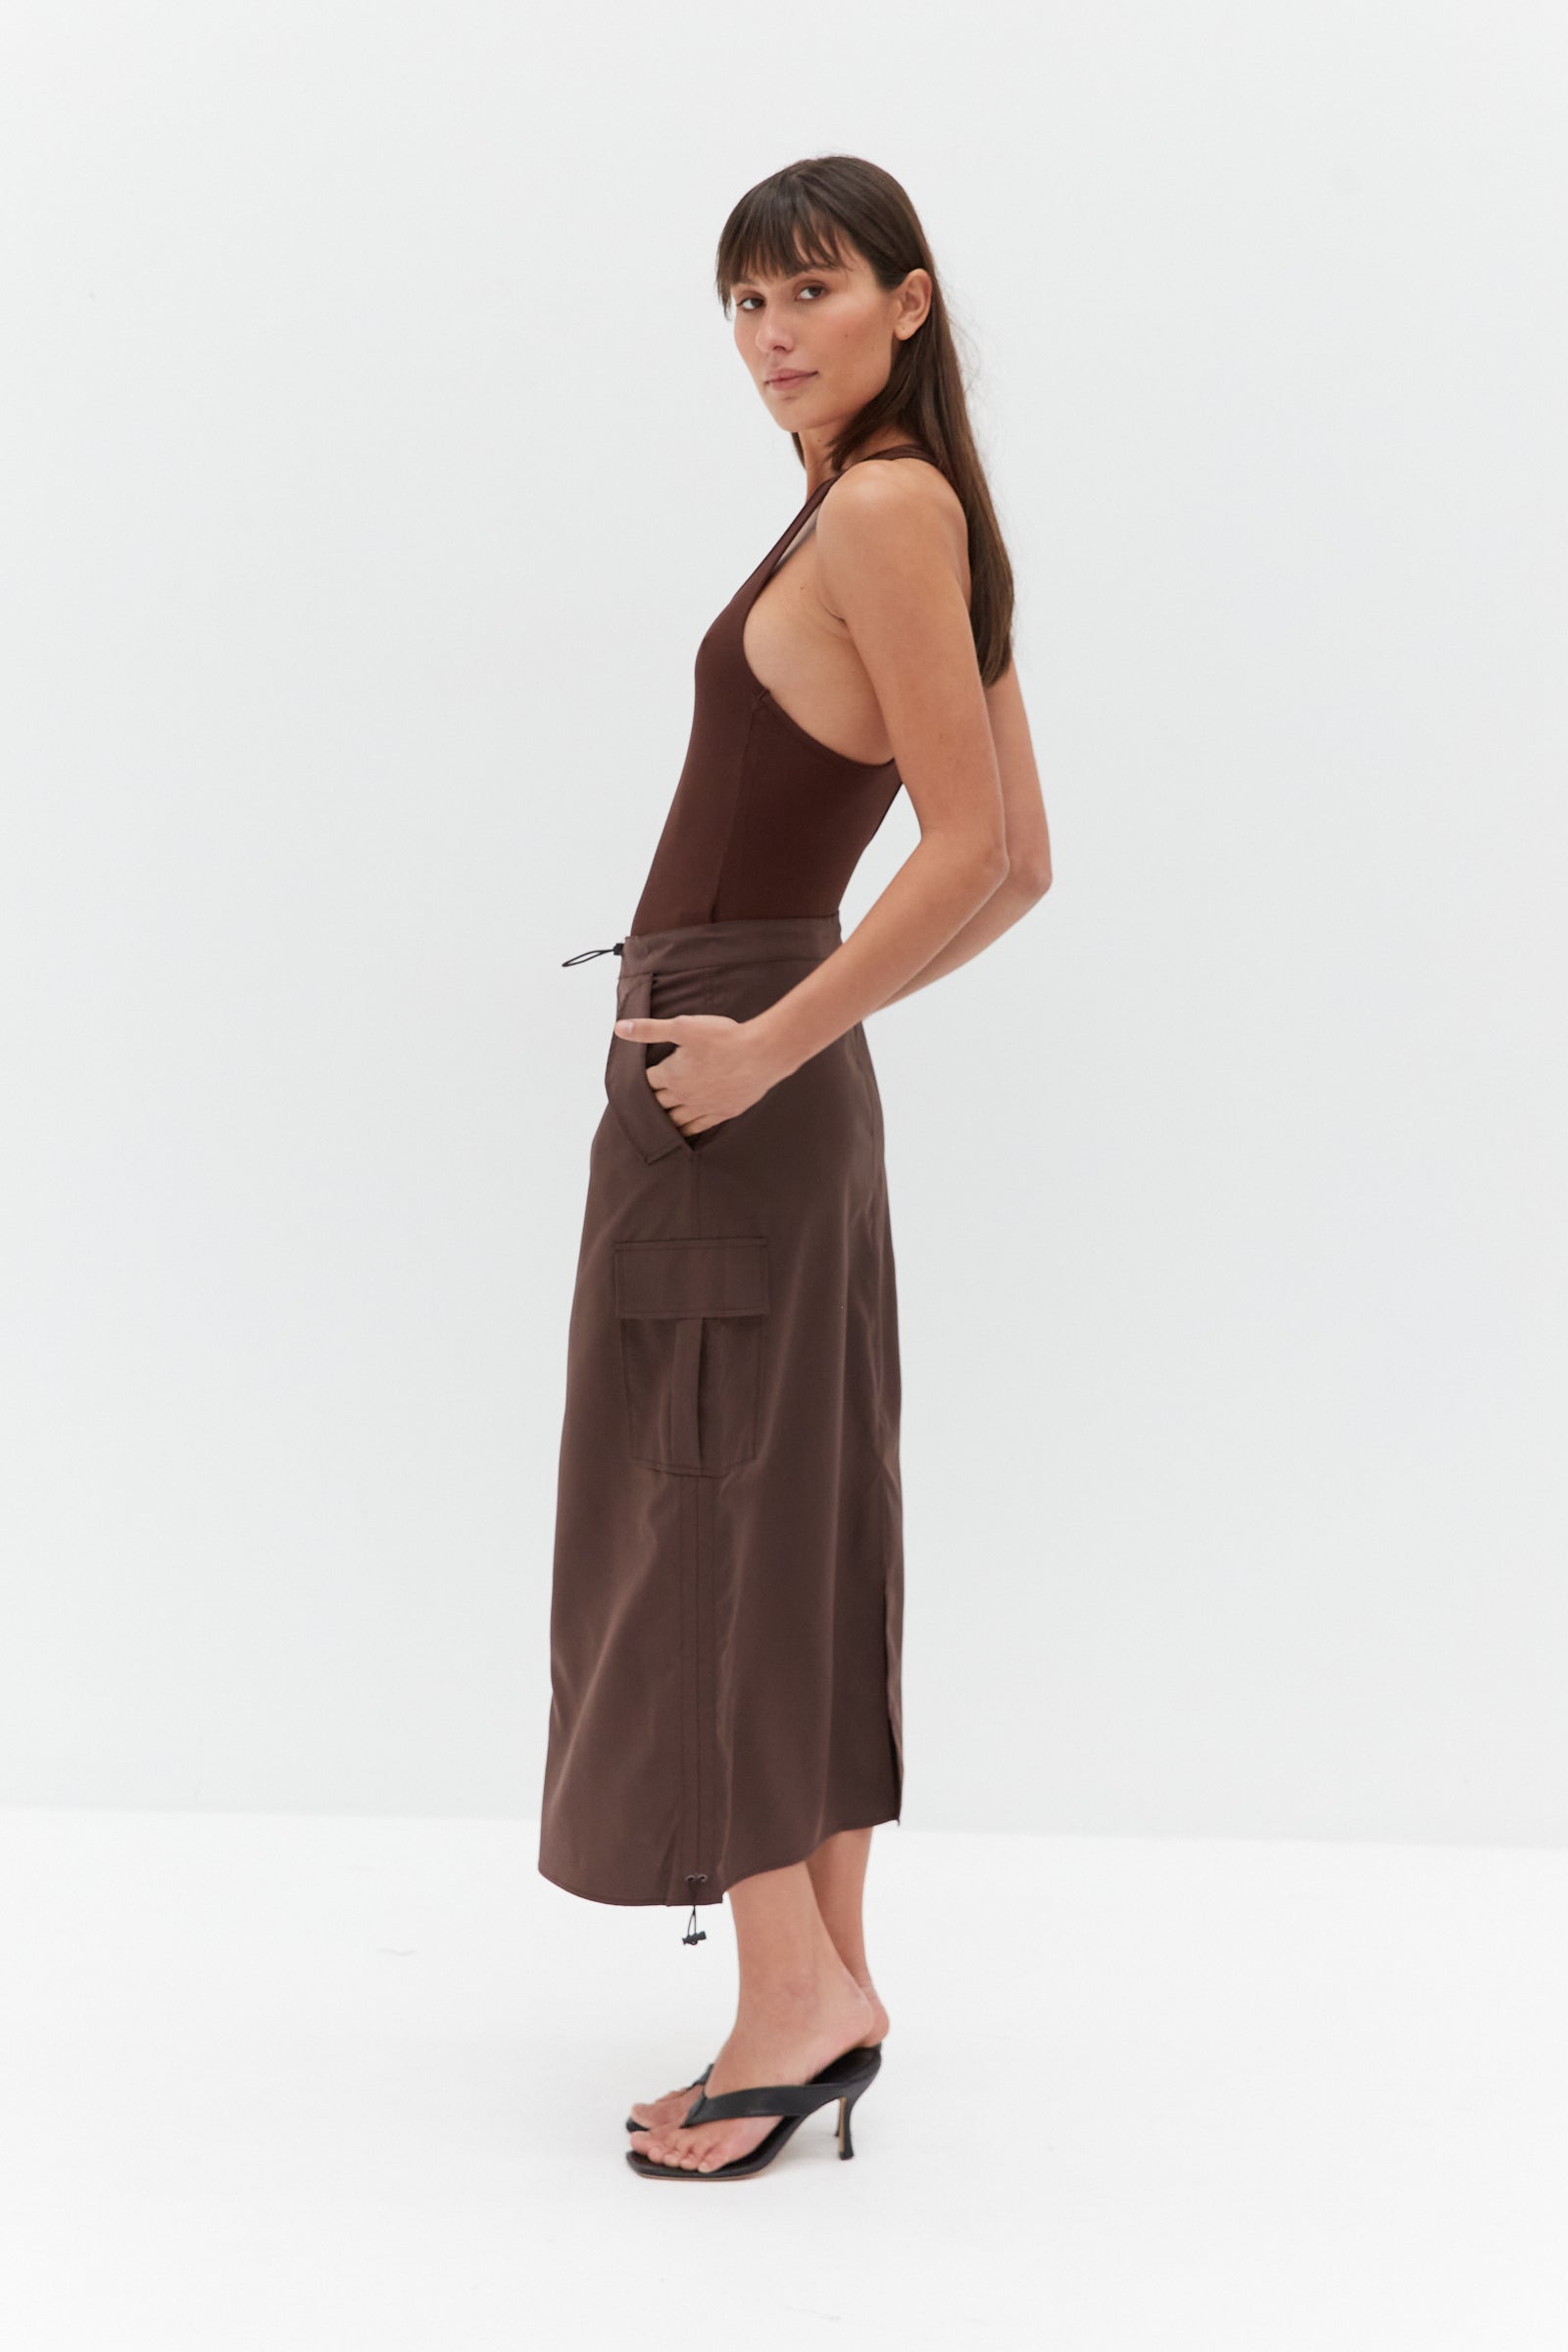 Chocolate Brown Skirt - High Waisted Midi Skirt - Cargo Skirt - Lulus